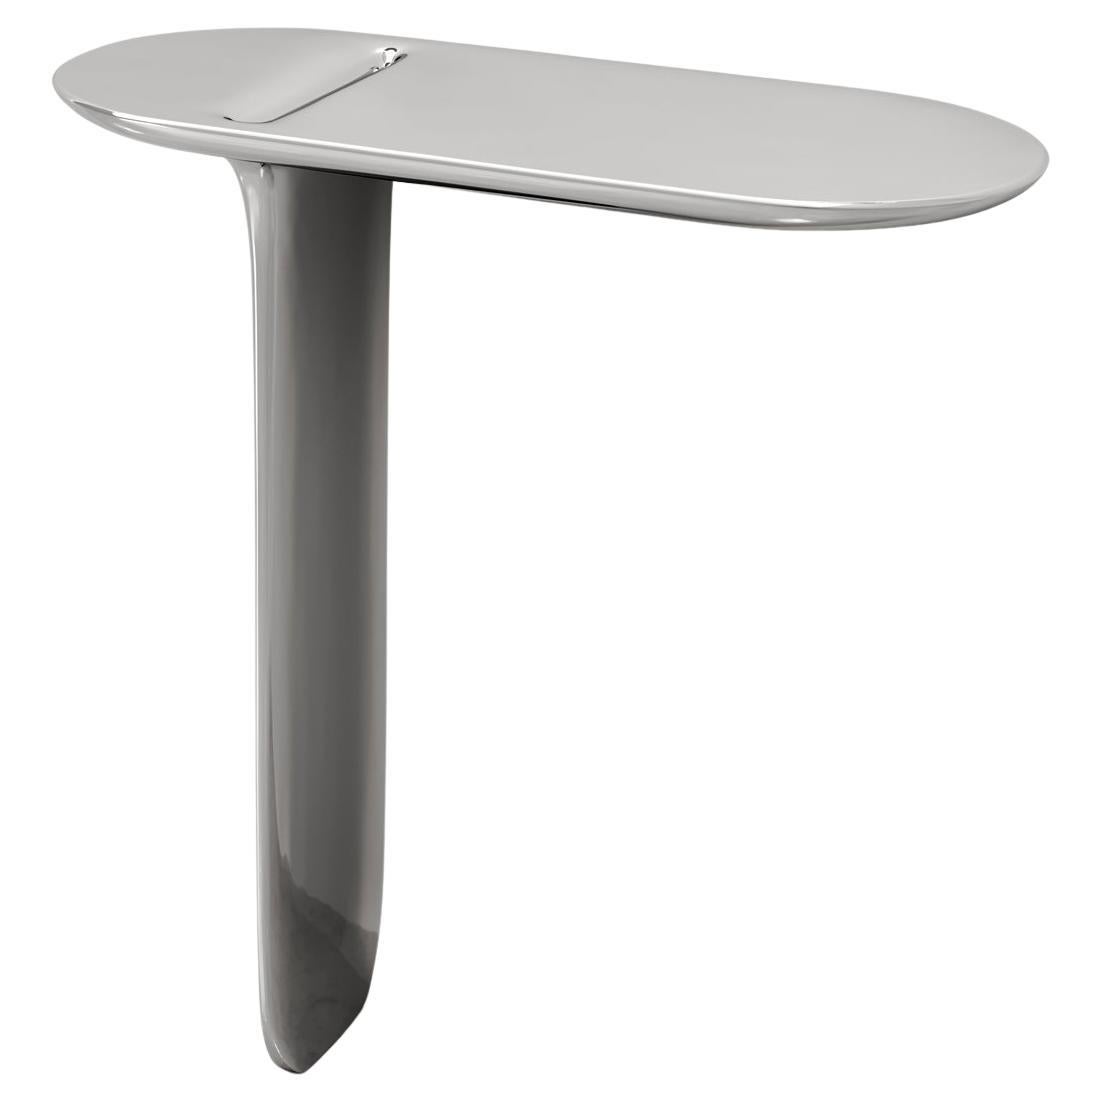 21st Century Matteo Cibic Console Table Chromed Lacquered MDF Scapin Collezioni For Sale